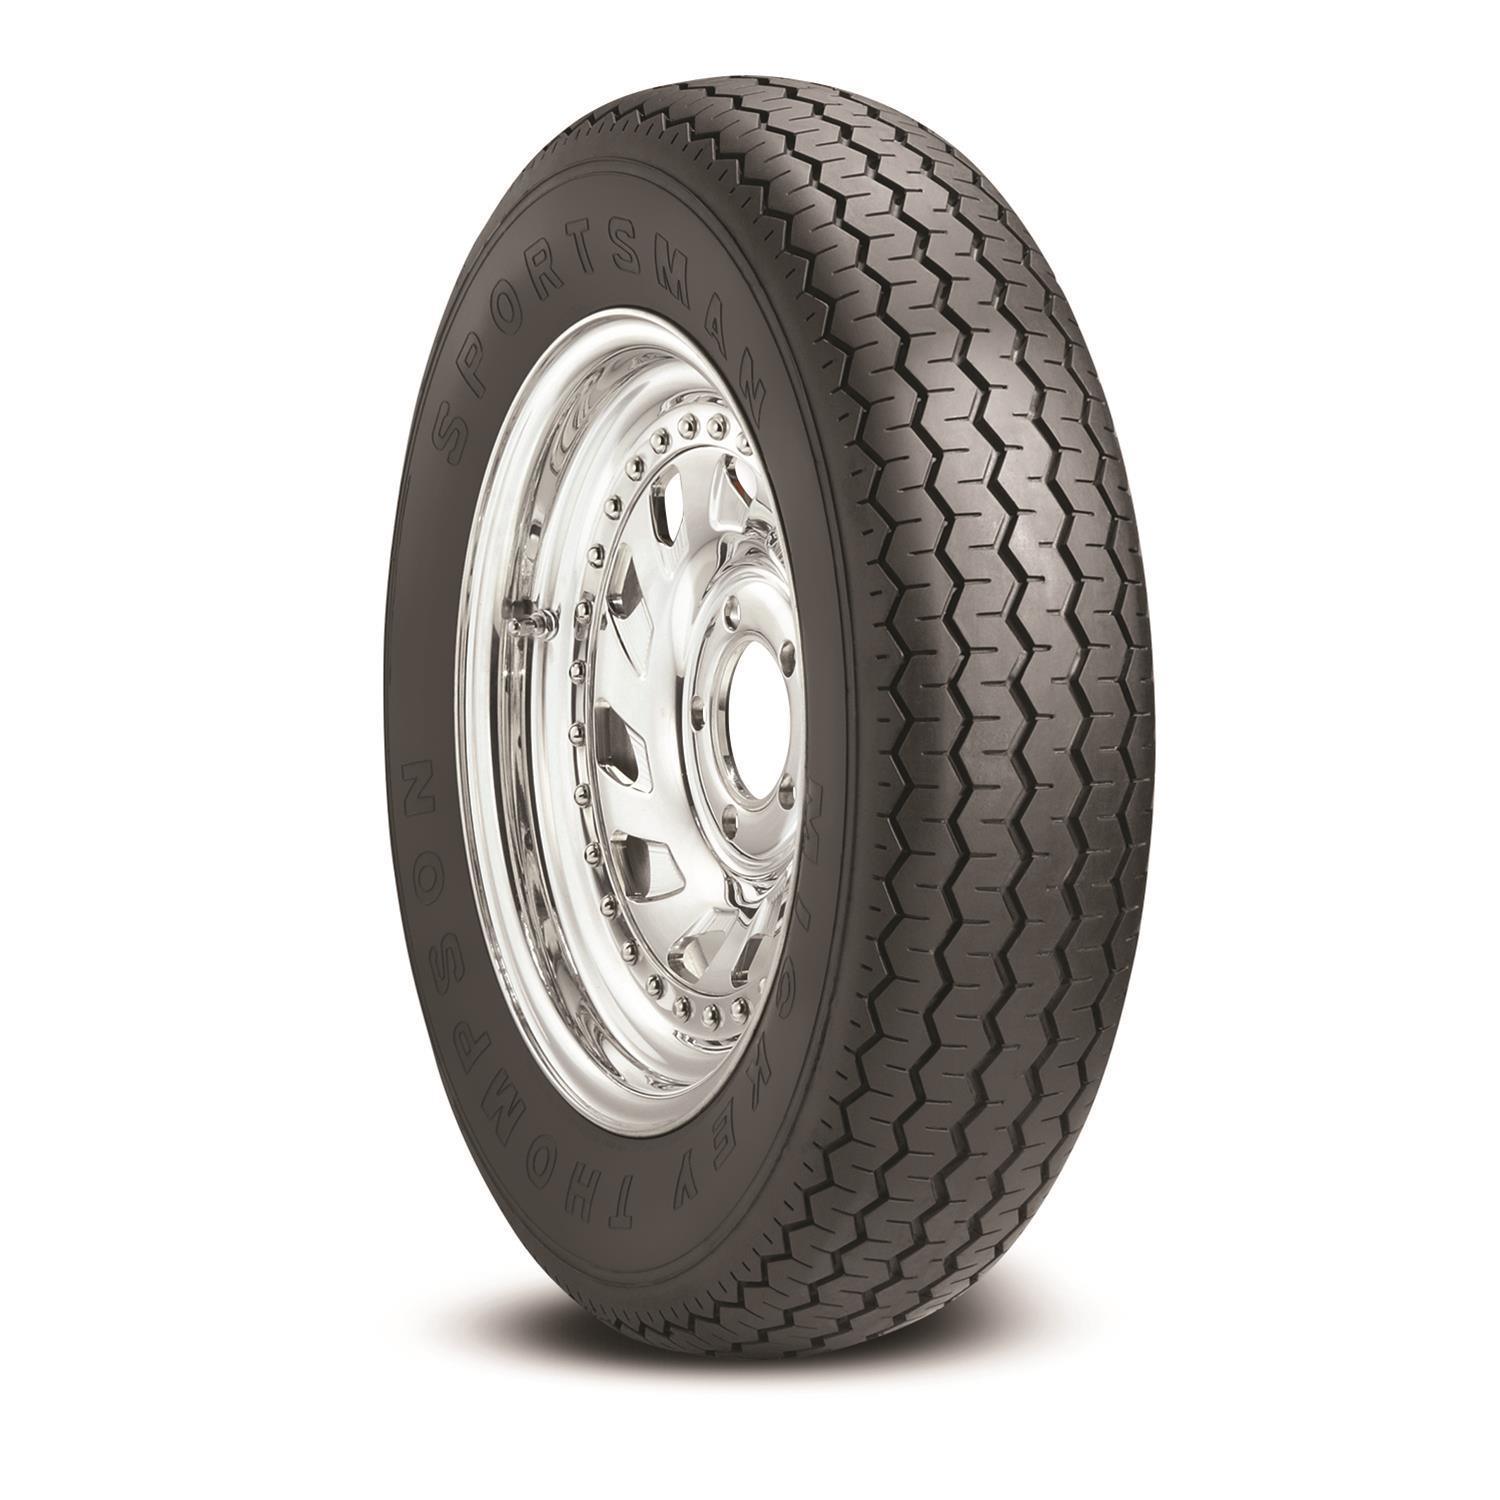 28x7.50-15LT Sportsman Front Tire - Burlile Performance Products